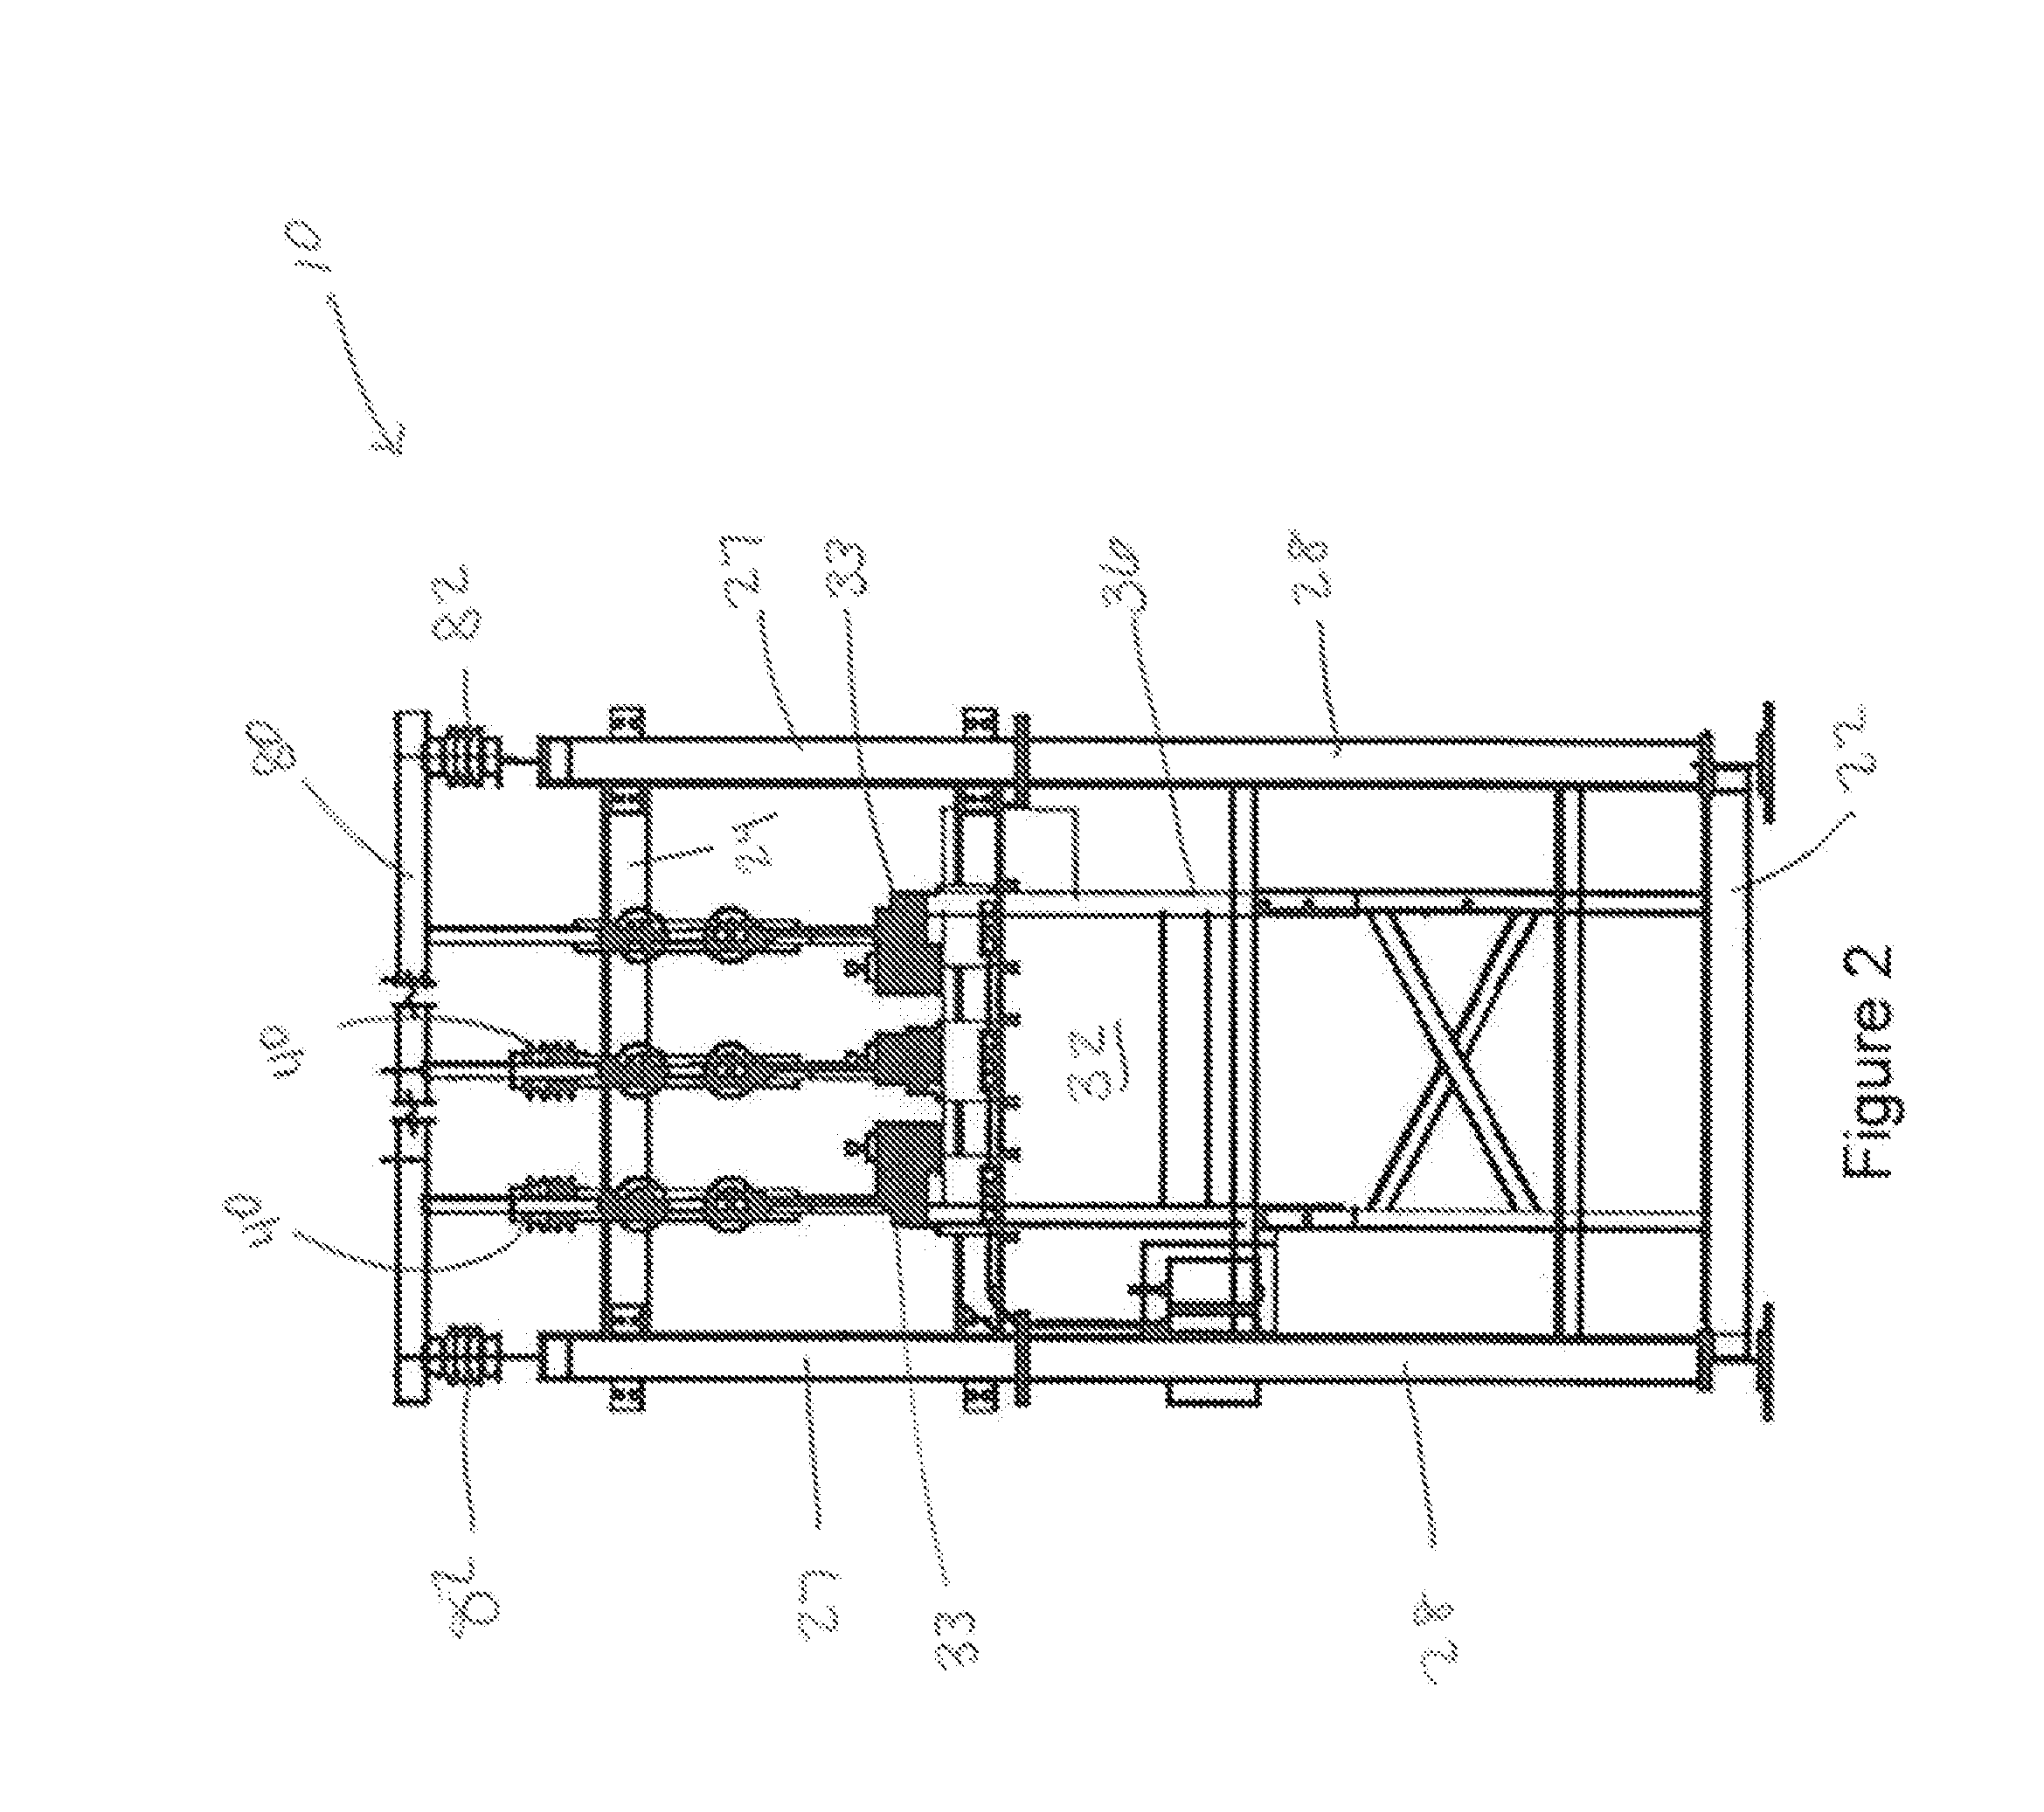 Modular substantion feeder assembly